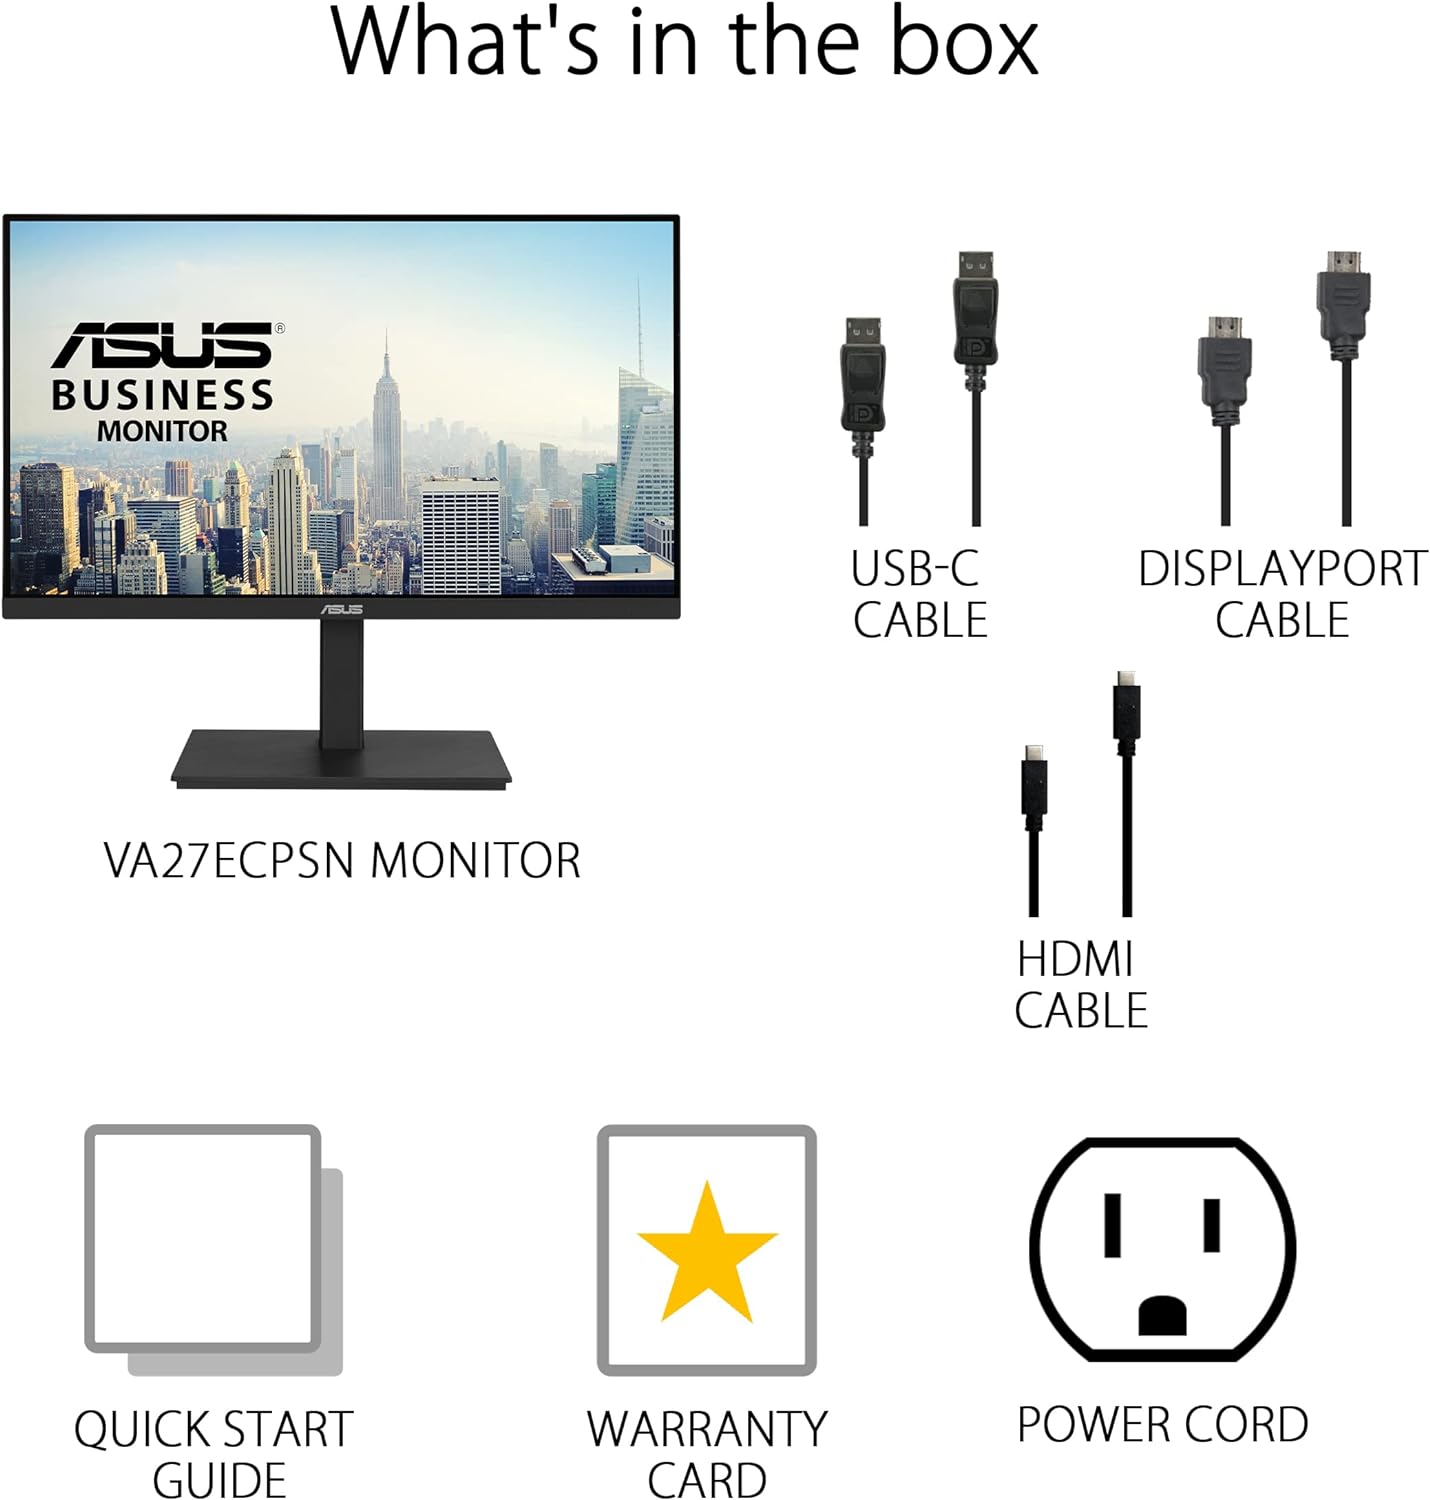 ASUS 34” Ultrawide Curved USB-C Docking Monitor (VA34VCPSN) - 21:9 QHD (3440 x 1440), 1500R Curvature, 100Hz, Adaptive Sync, USB Hub, RJ45, Eye Care, Frameless, VESA Wall Mountable, Height Adjustable